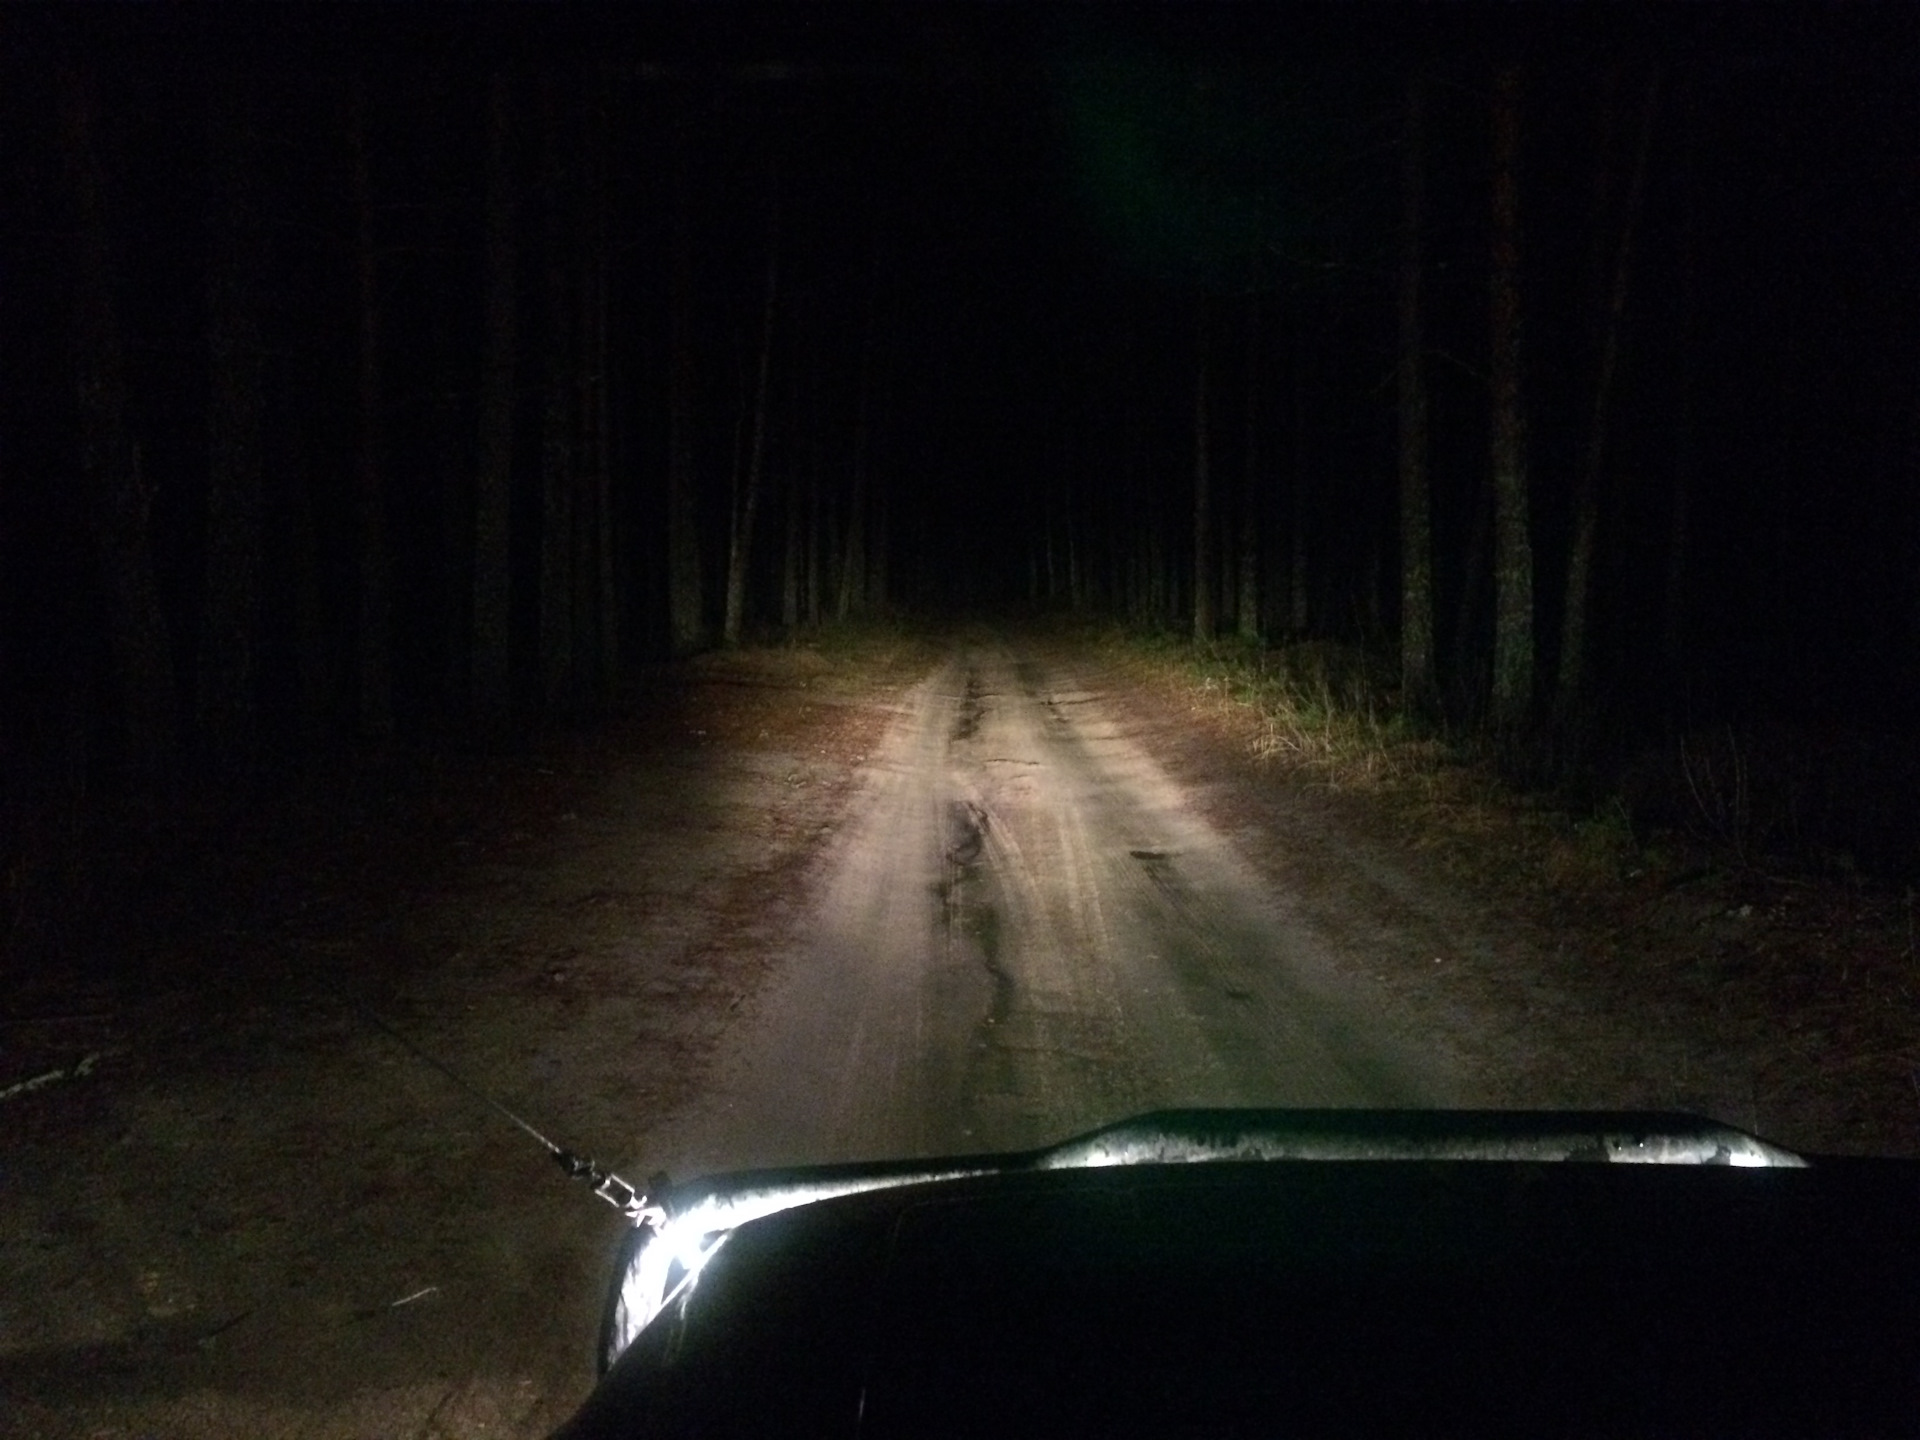 Ночь дорога свет фар. Дорога ночью. Свет фар на дороге. Ночная дорога фары. Фары в лесу.